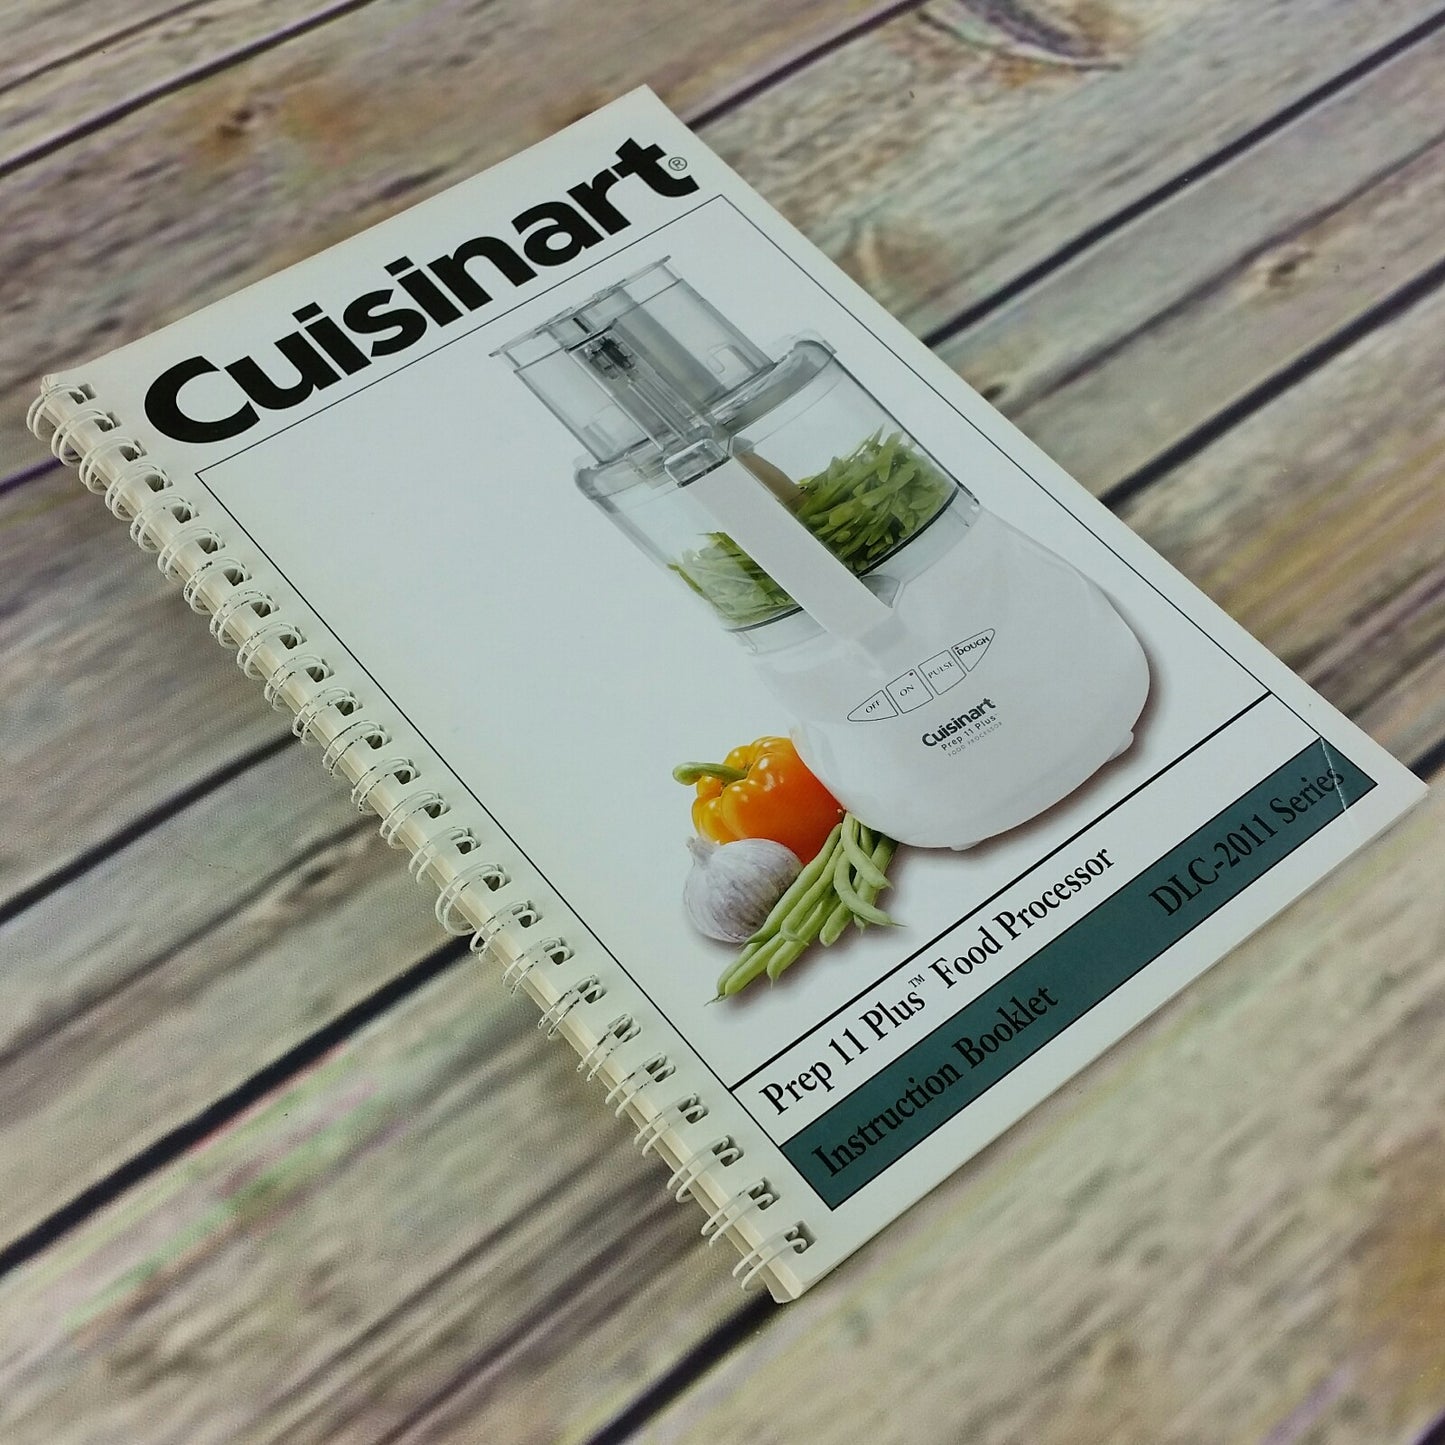 Cuisinart Prep 11 Plus Processor DLC-2011 Owners Manual Recipes and Instructions - At Grandma's Table